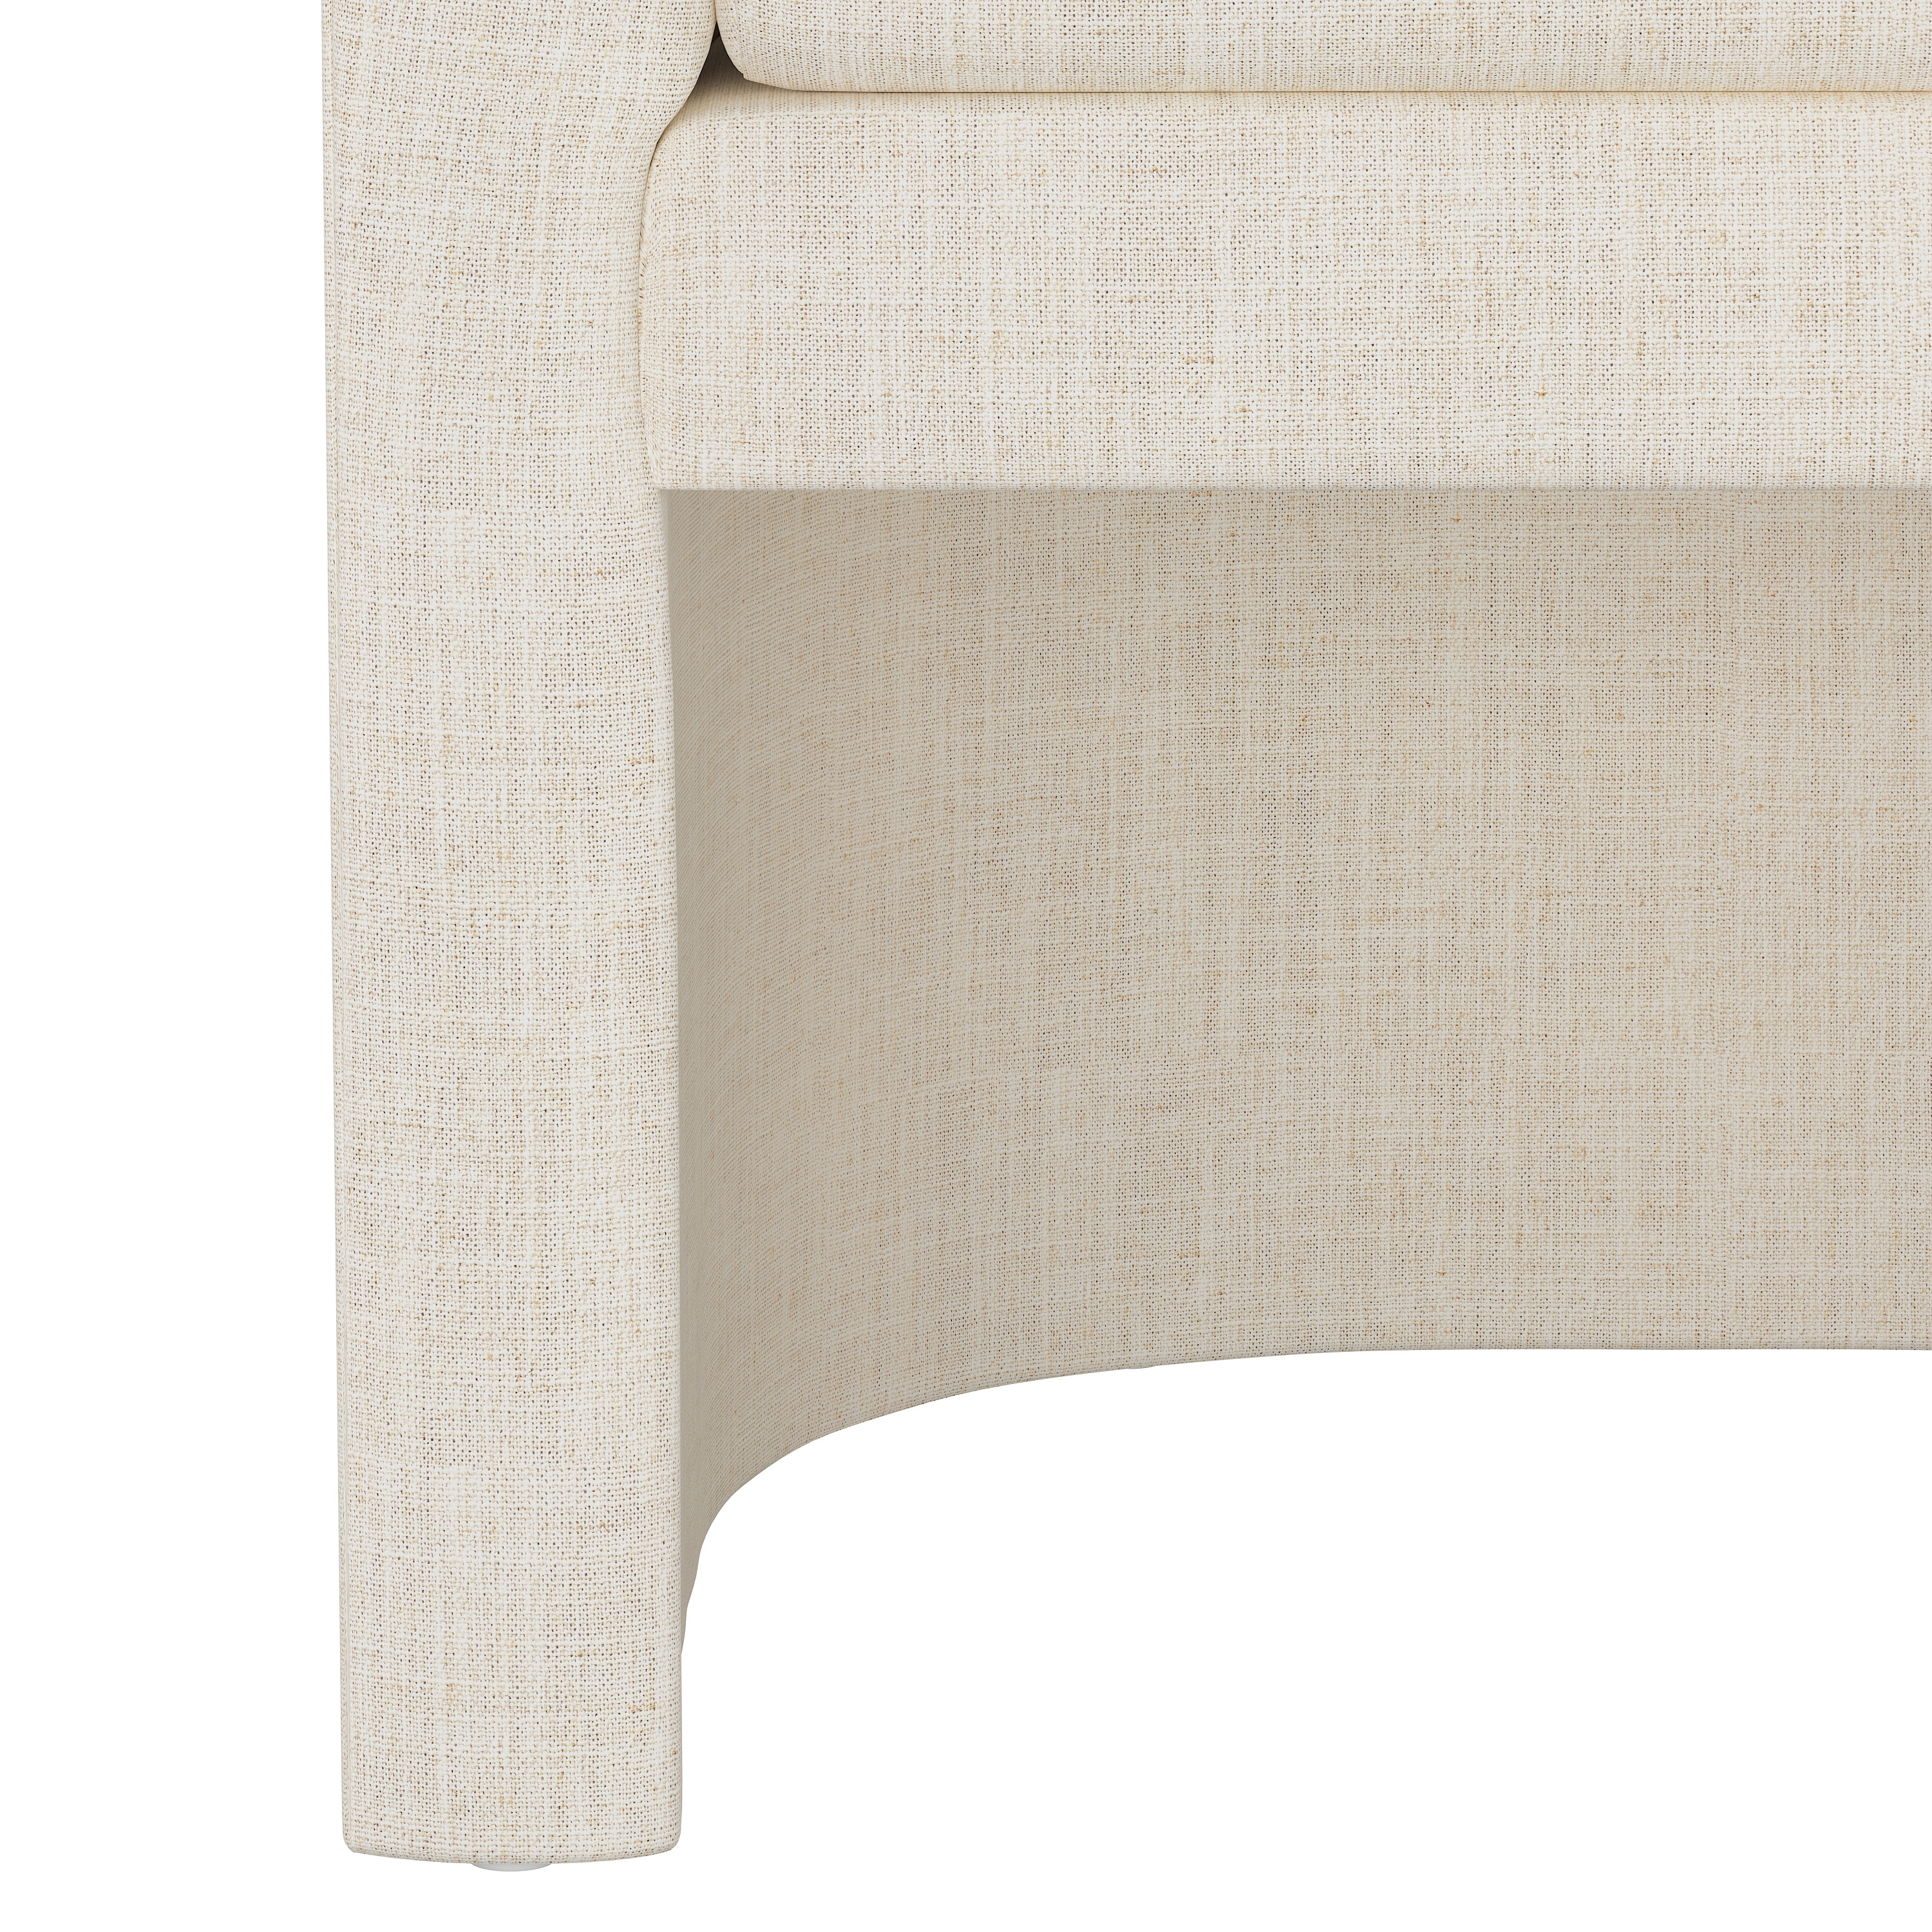 Wellshire Chair, Talc Linen - Image 4